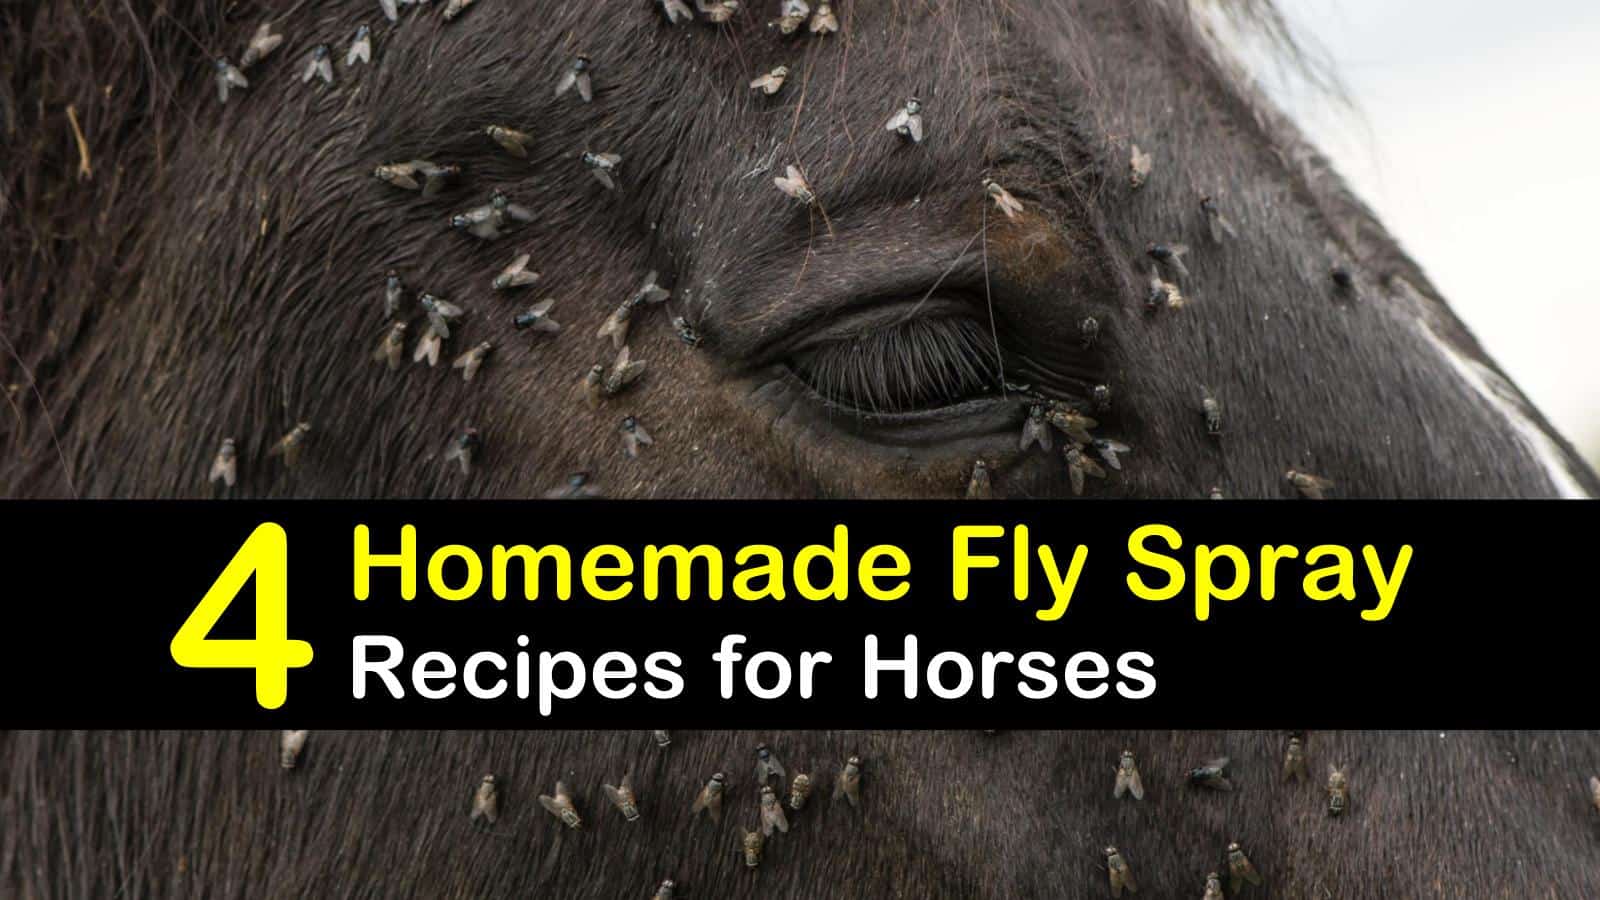 homemade fly spray for horses titleimg1